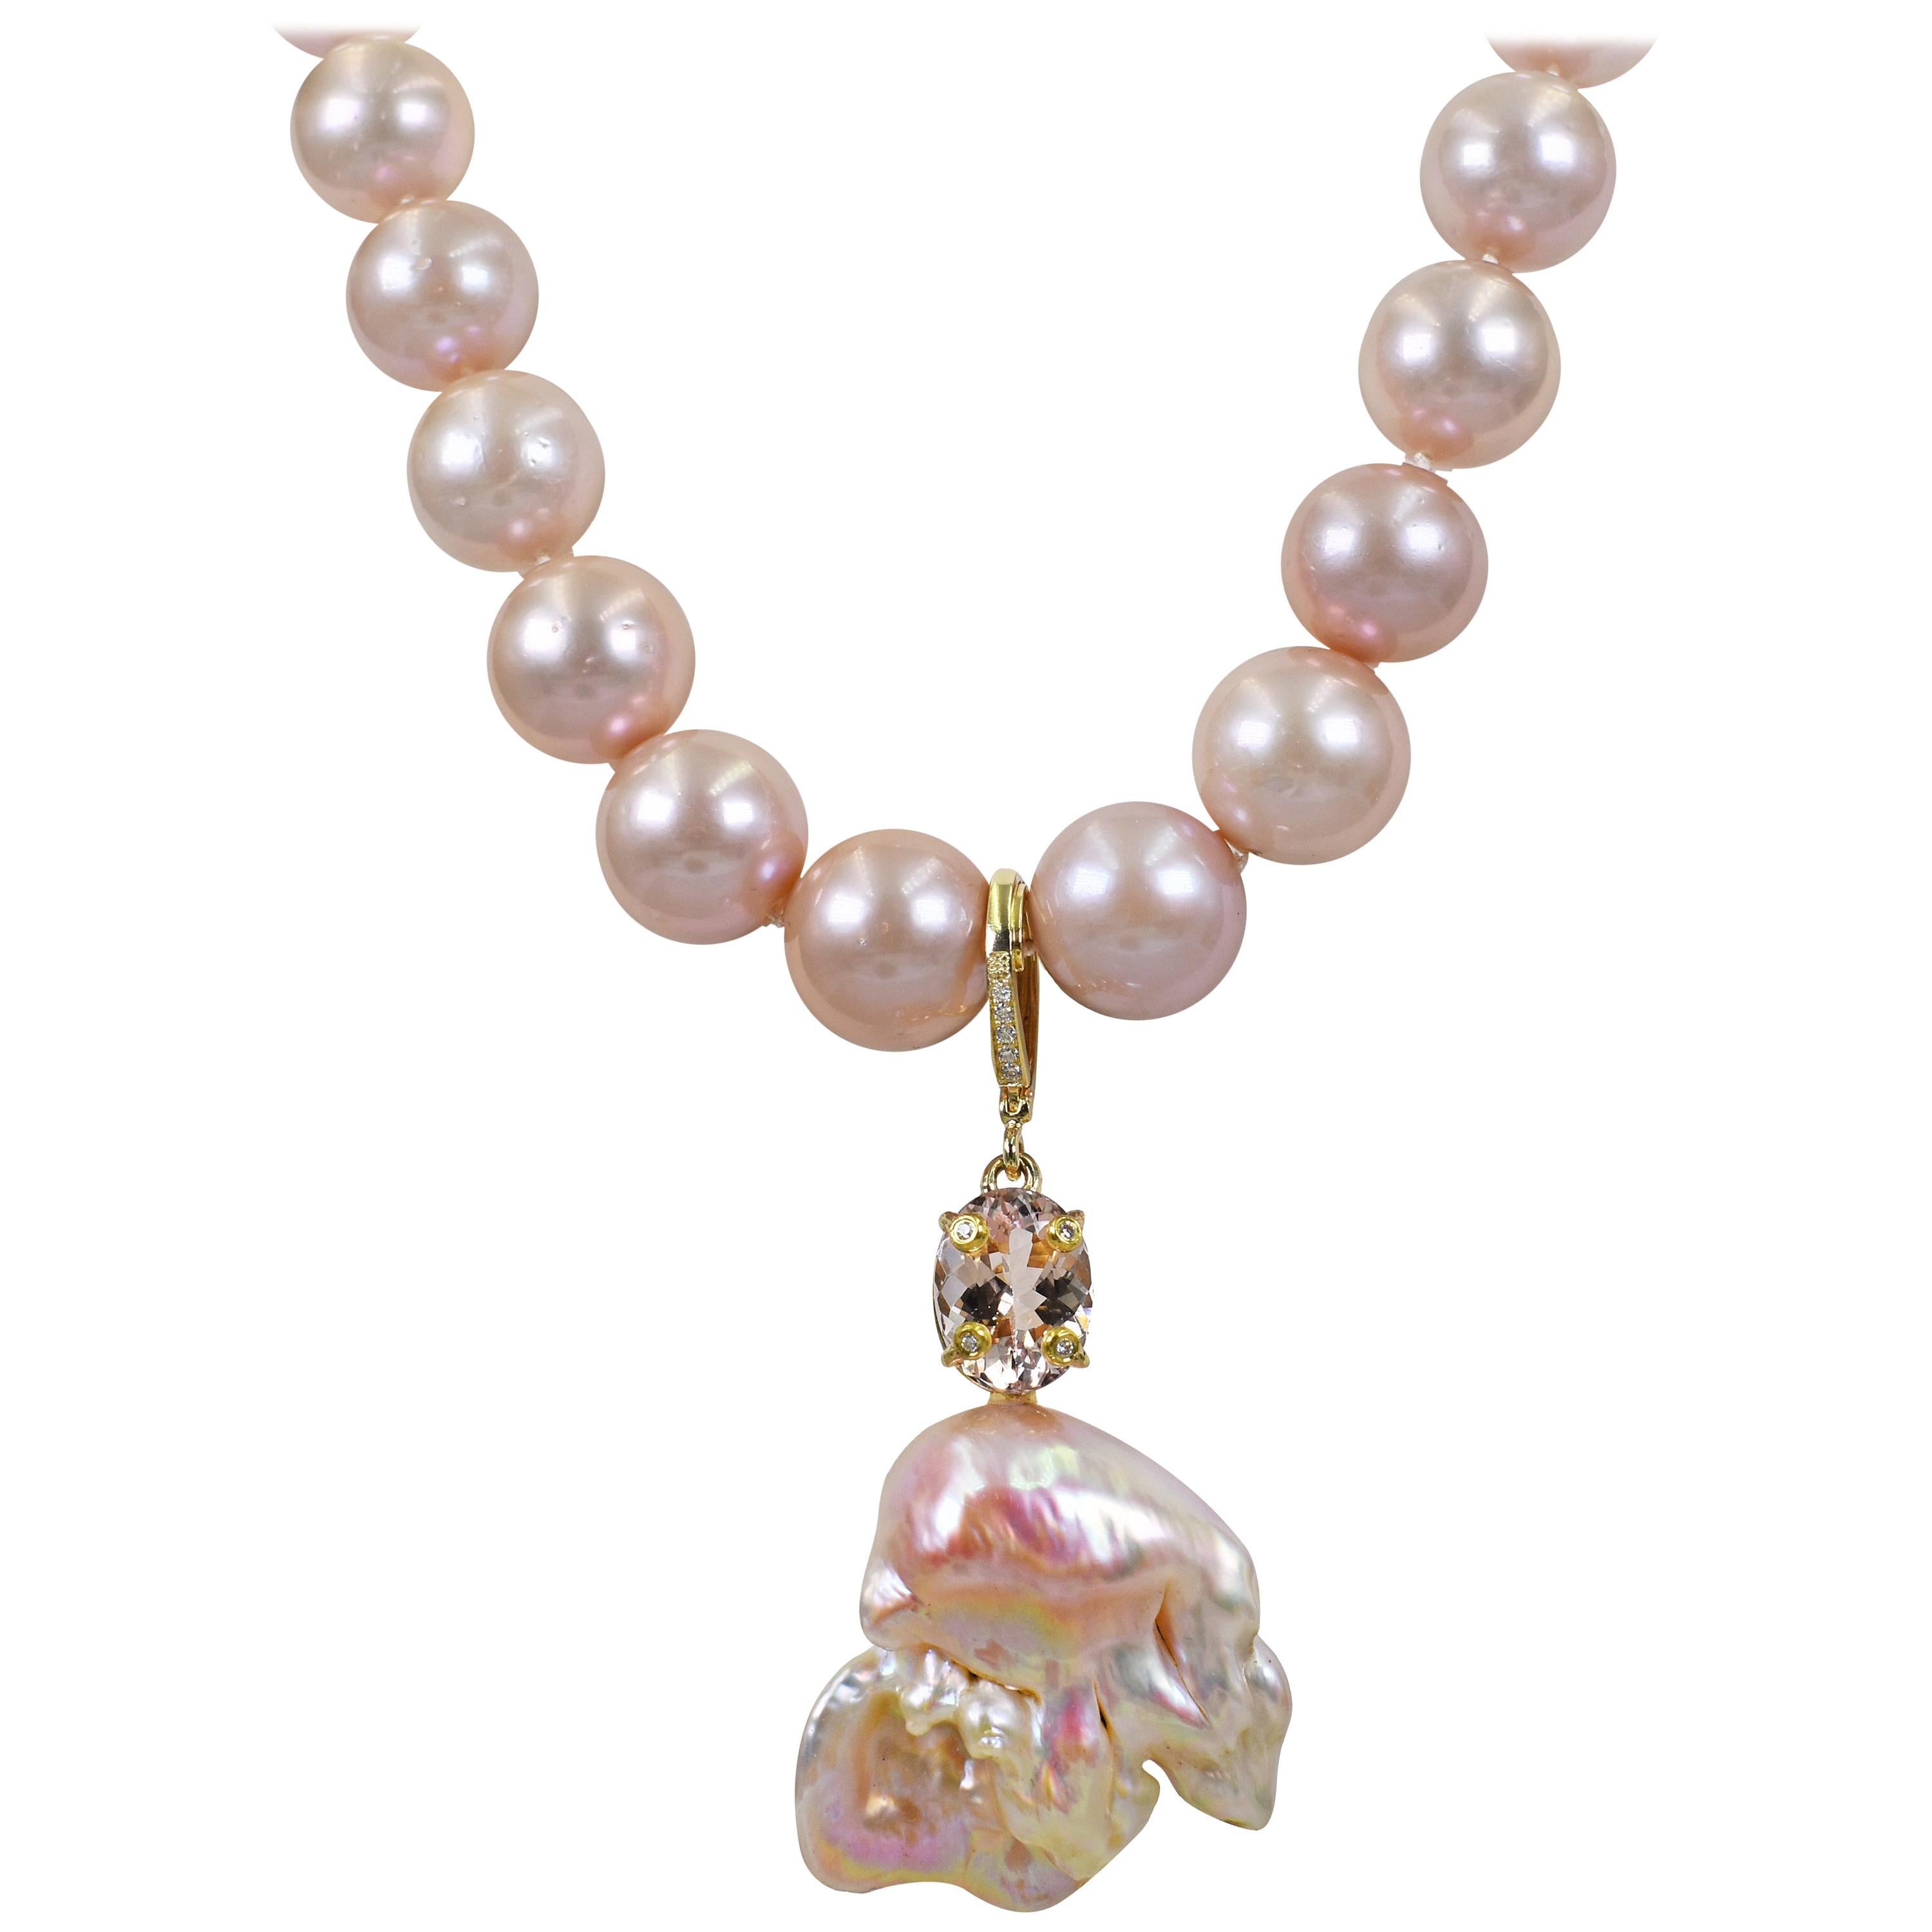 Pendentif en Morganite et perles baroques sur collier de perles roses graduées